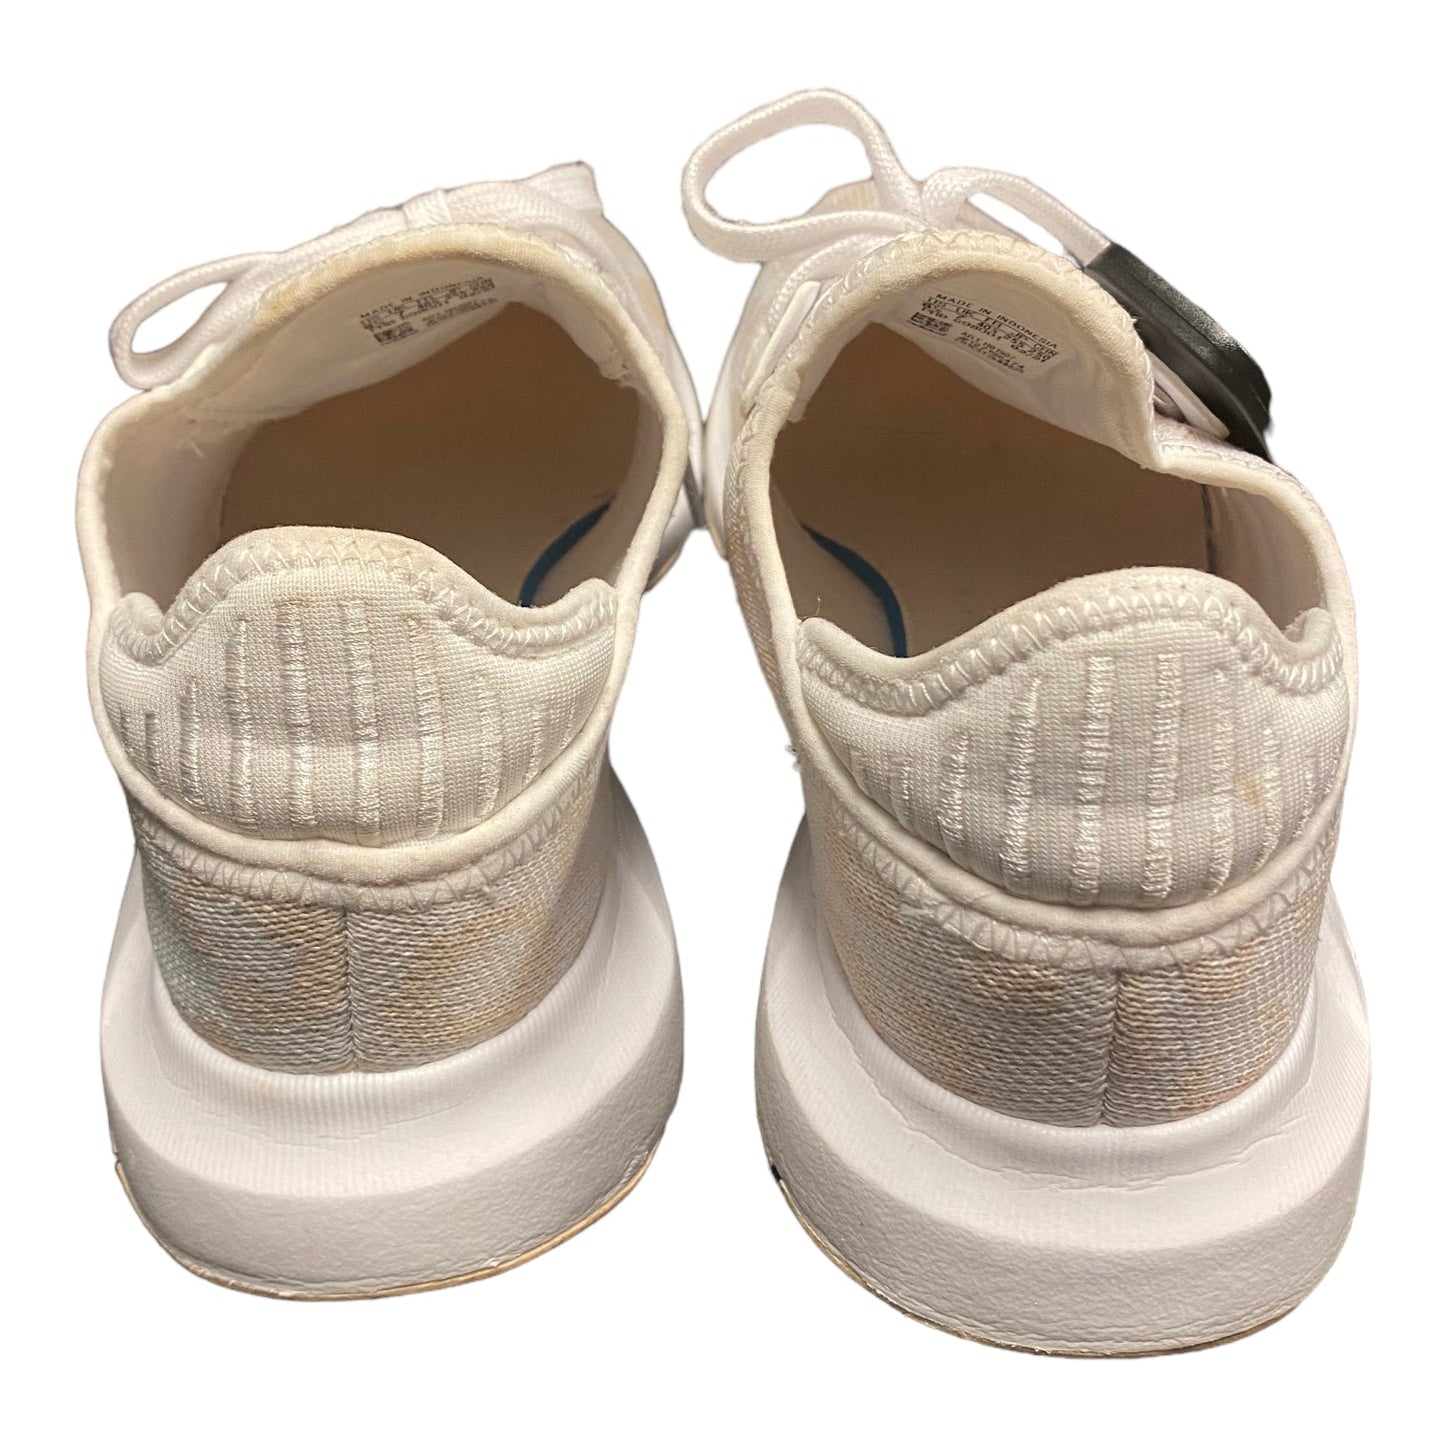 Animal Print Shoes Athletic Adidas, Size 8.5